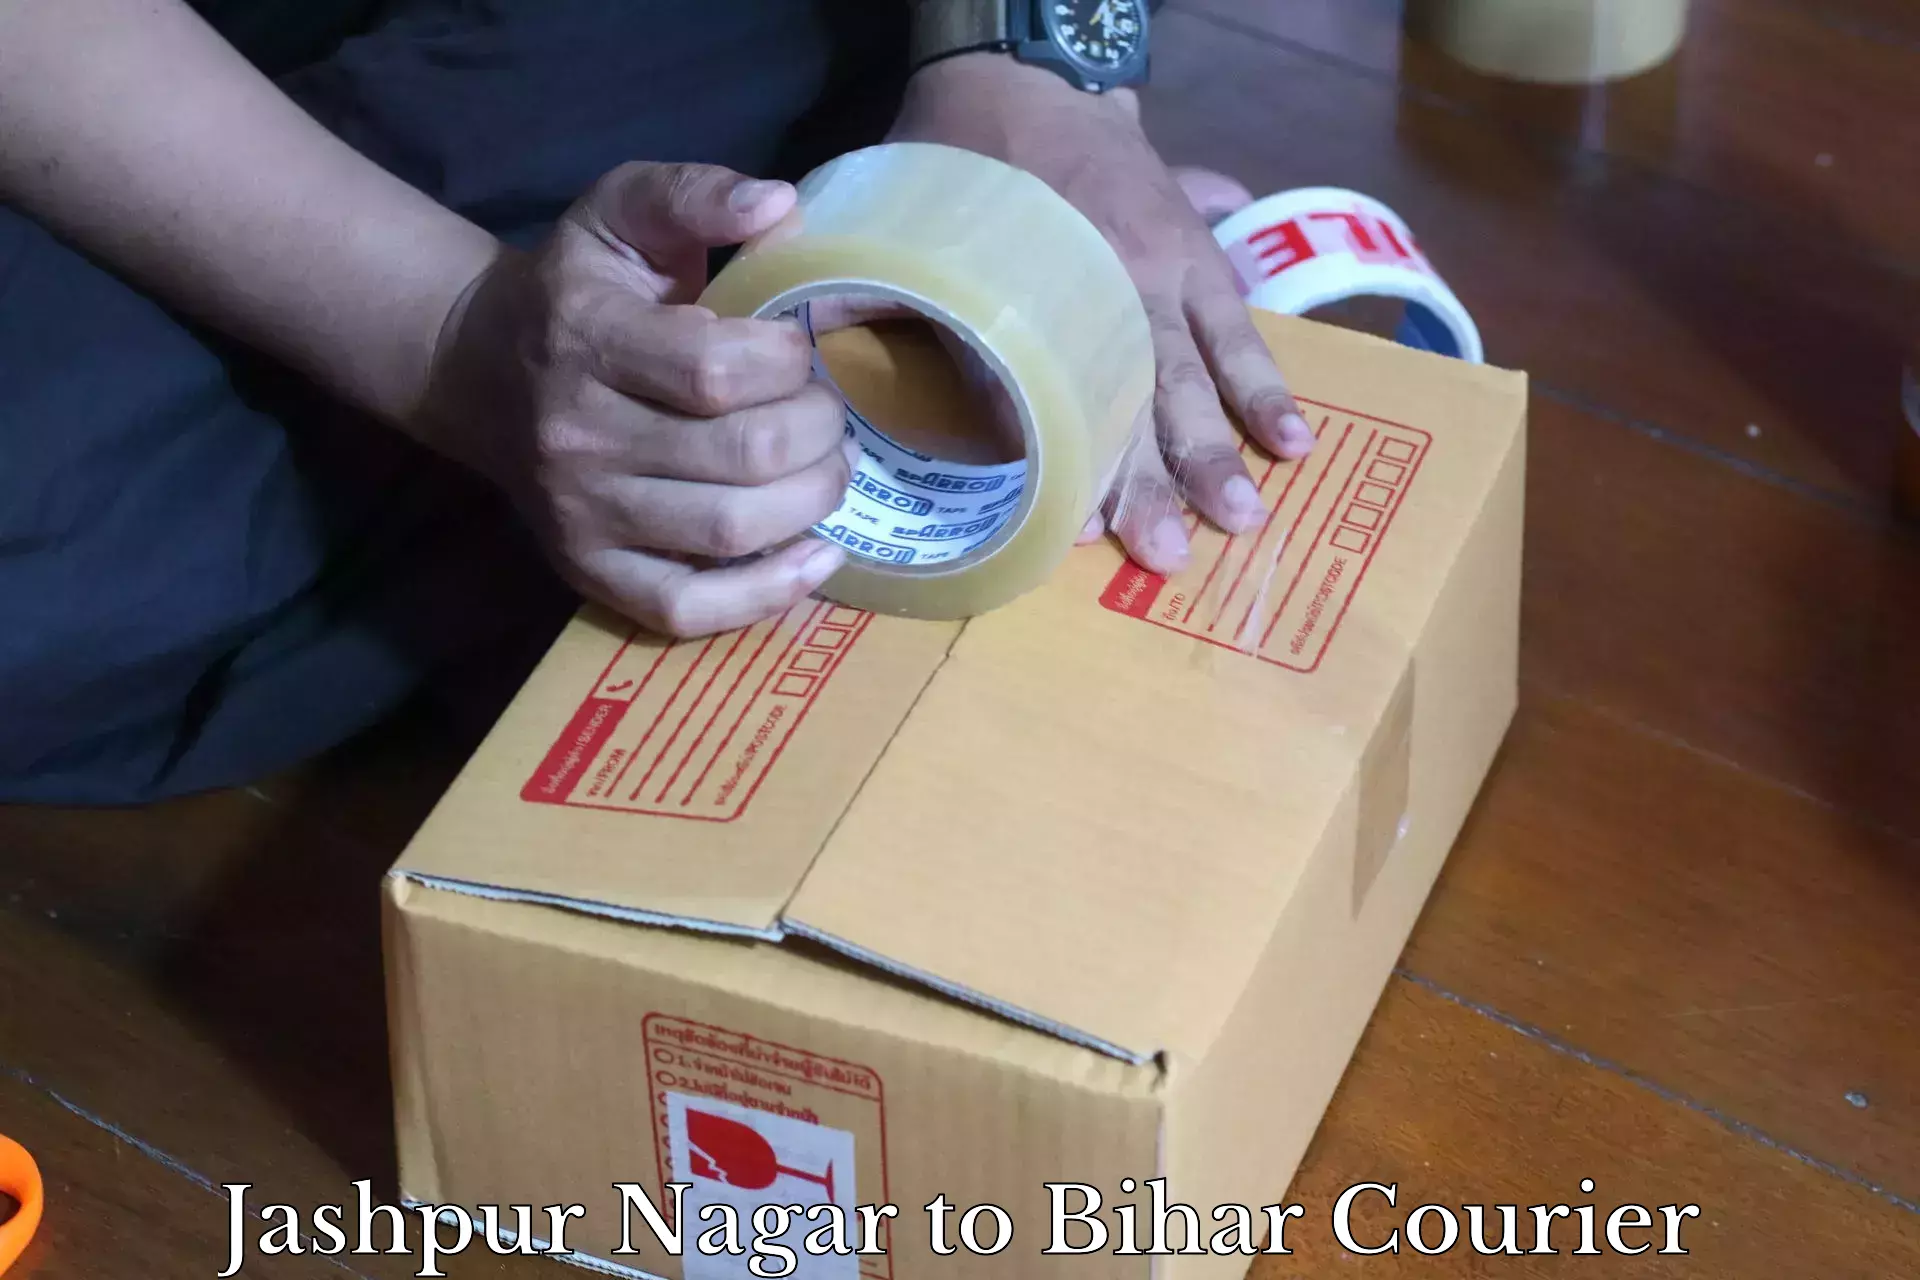 Global courier networks Jashpur Nagar to Rajpur